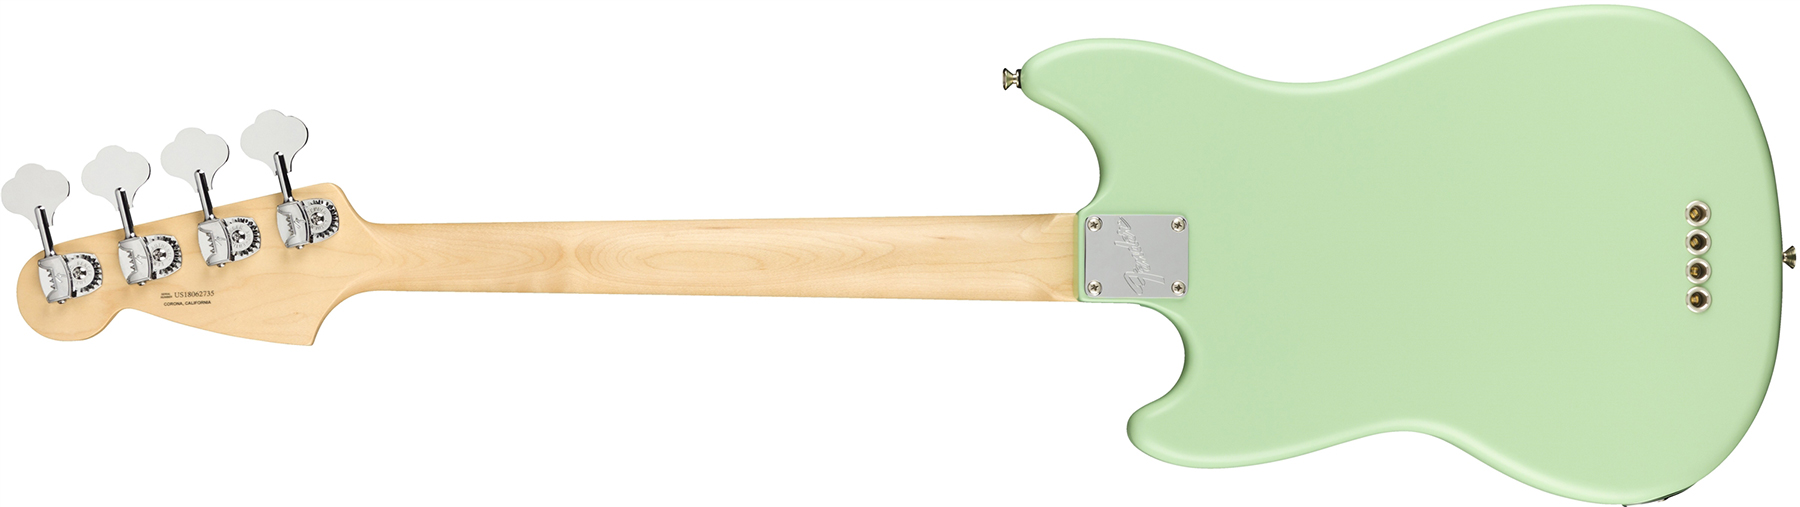 Fender Mustang Bass American Performer Usa Rw - Satin Surf Green - Bajo eléctrico para niños - Variation 1